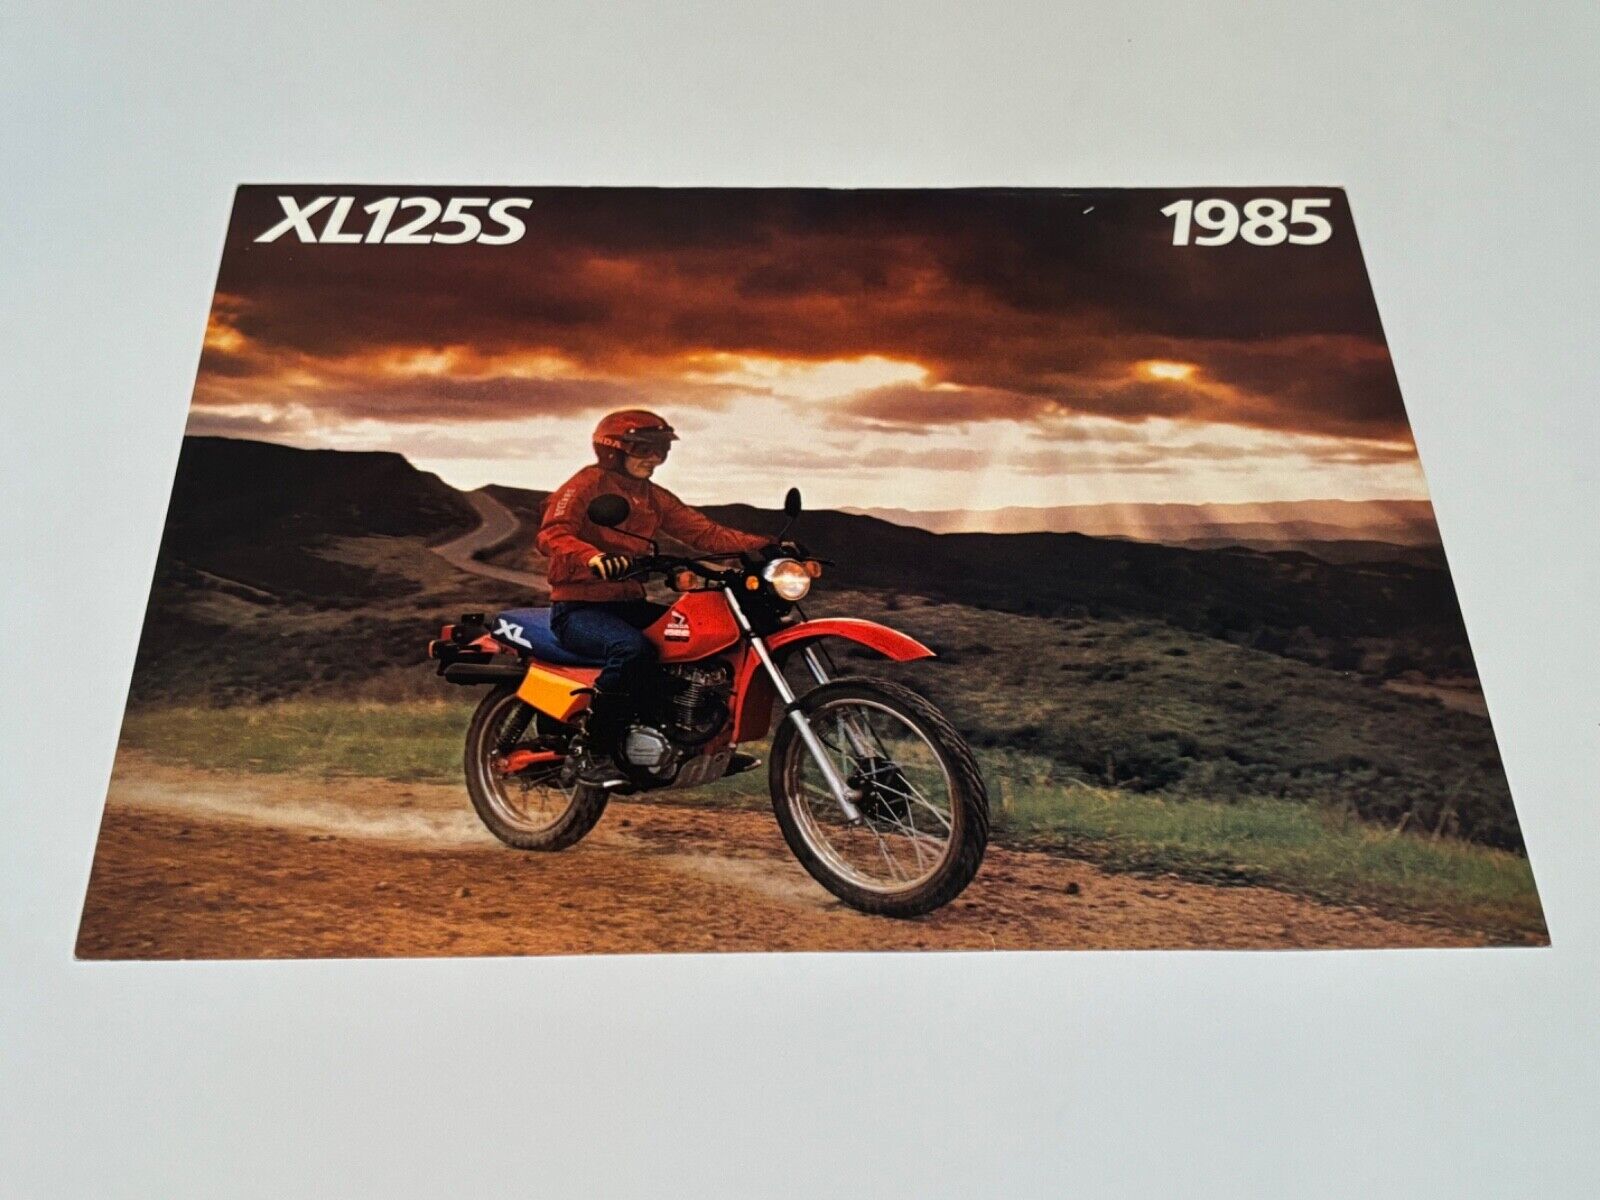 Original 1985 Honda XL125S Motorcycle Dealer Sales Brochure